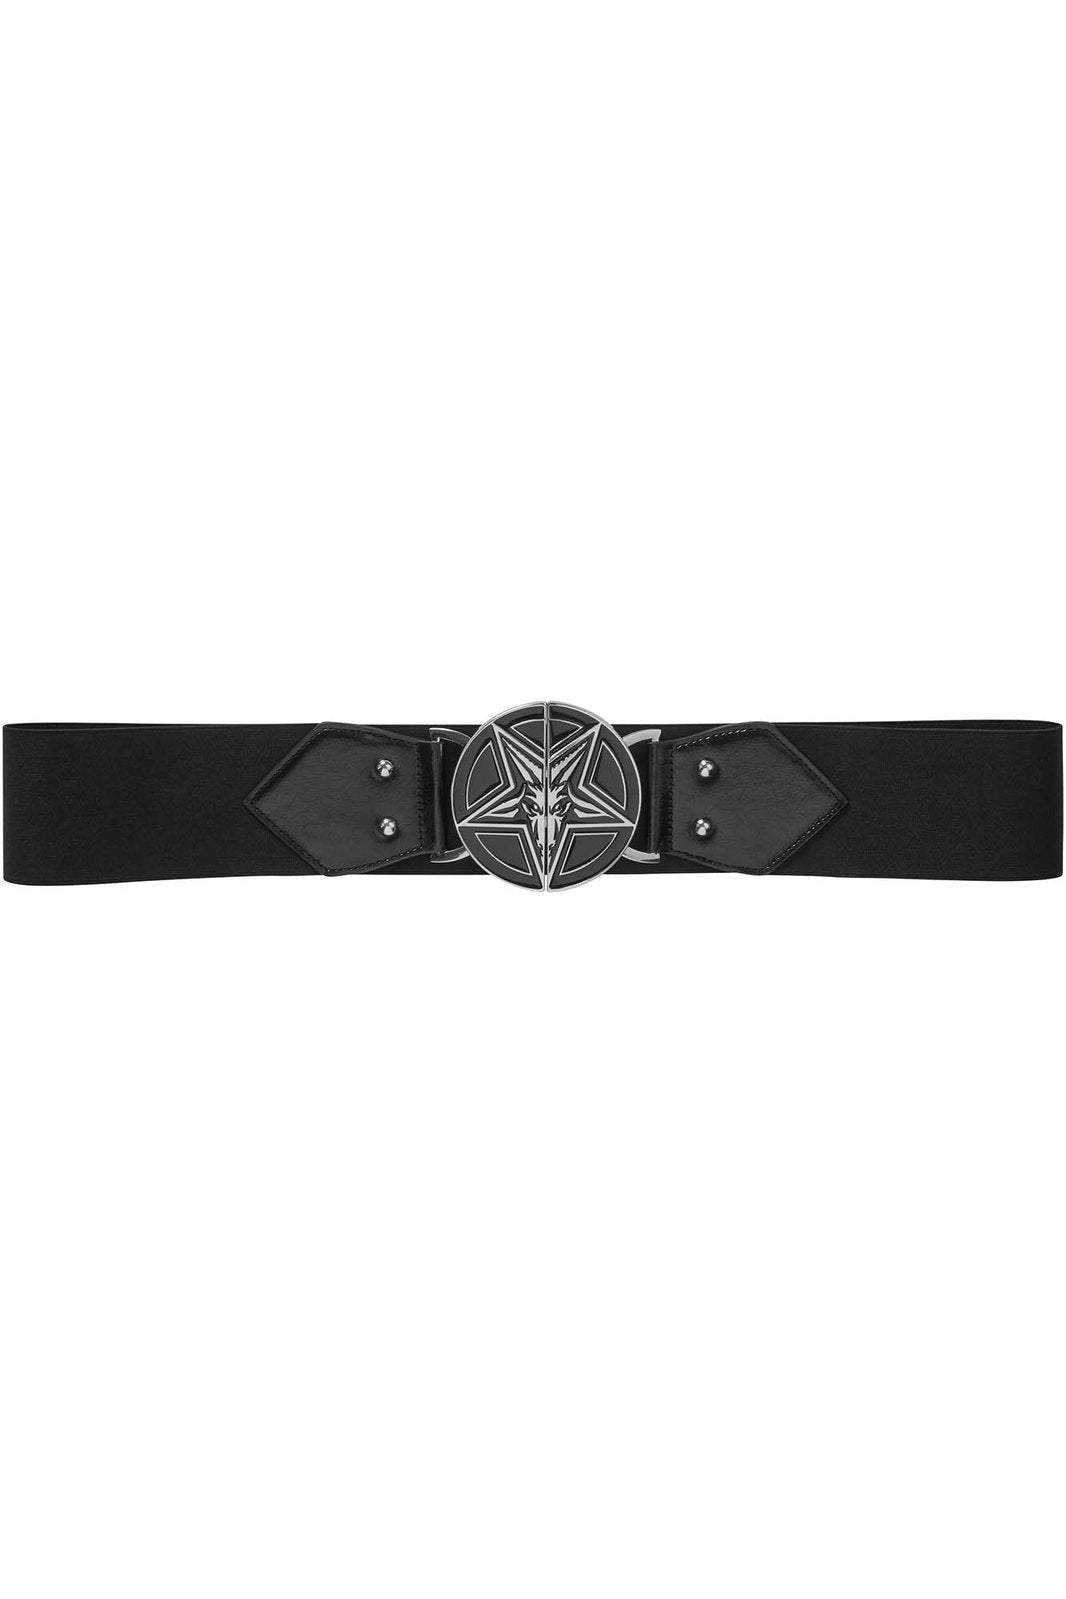 Gothic high waisted belt